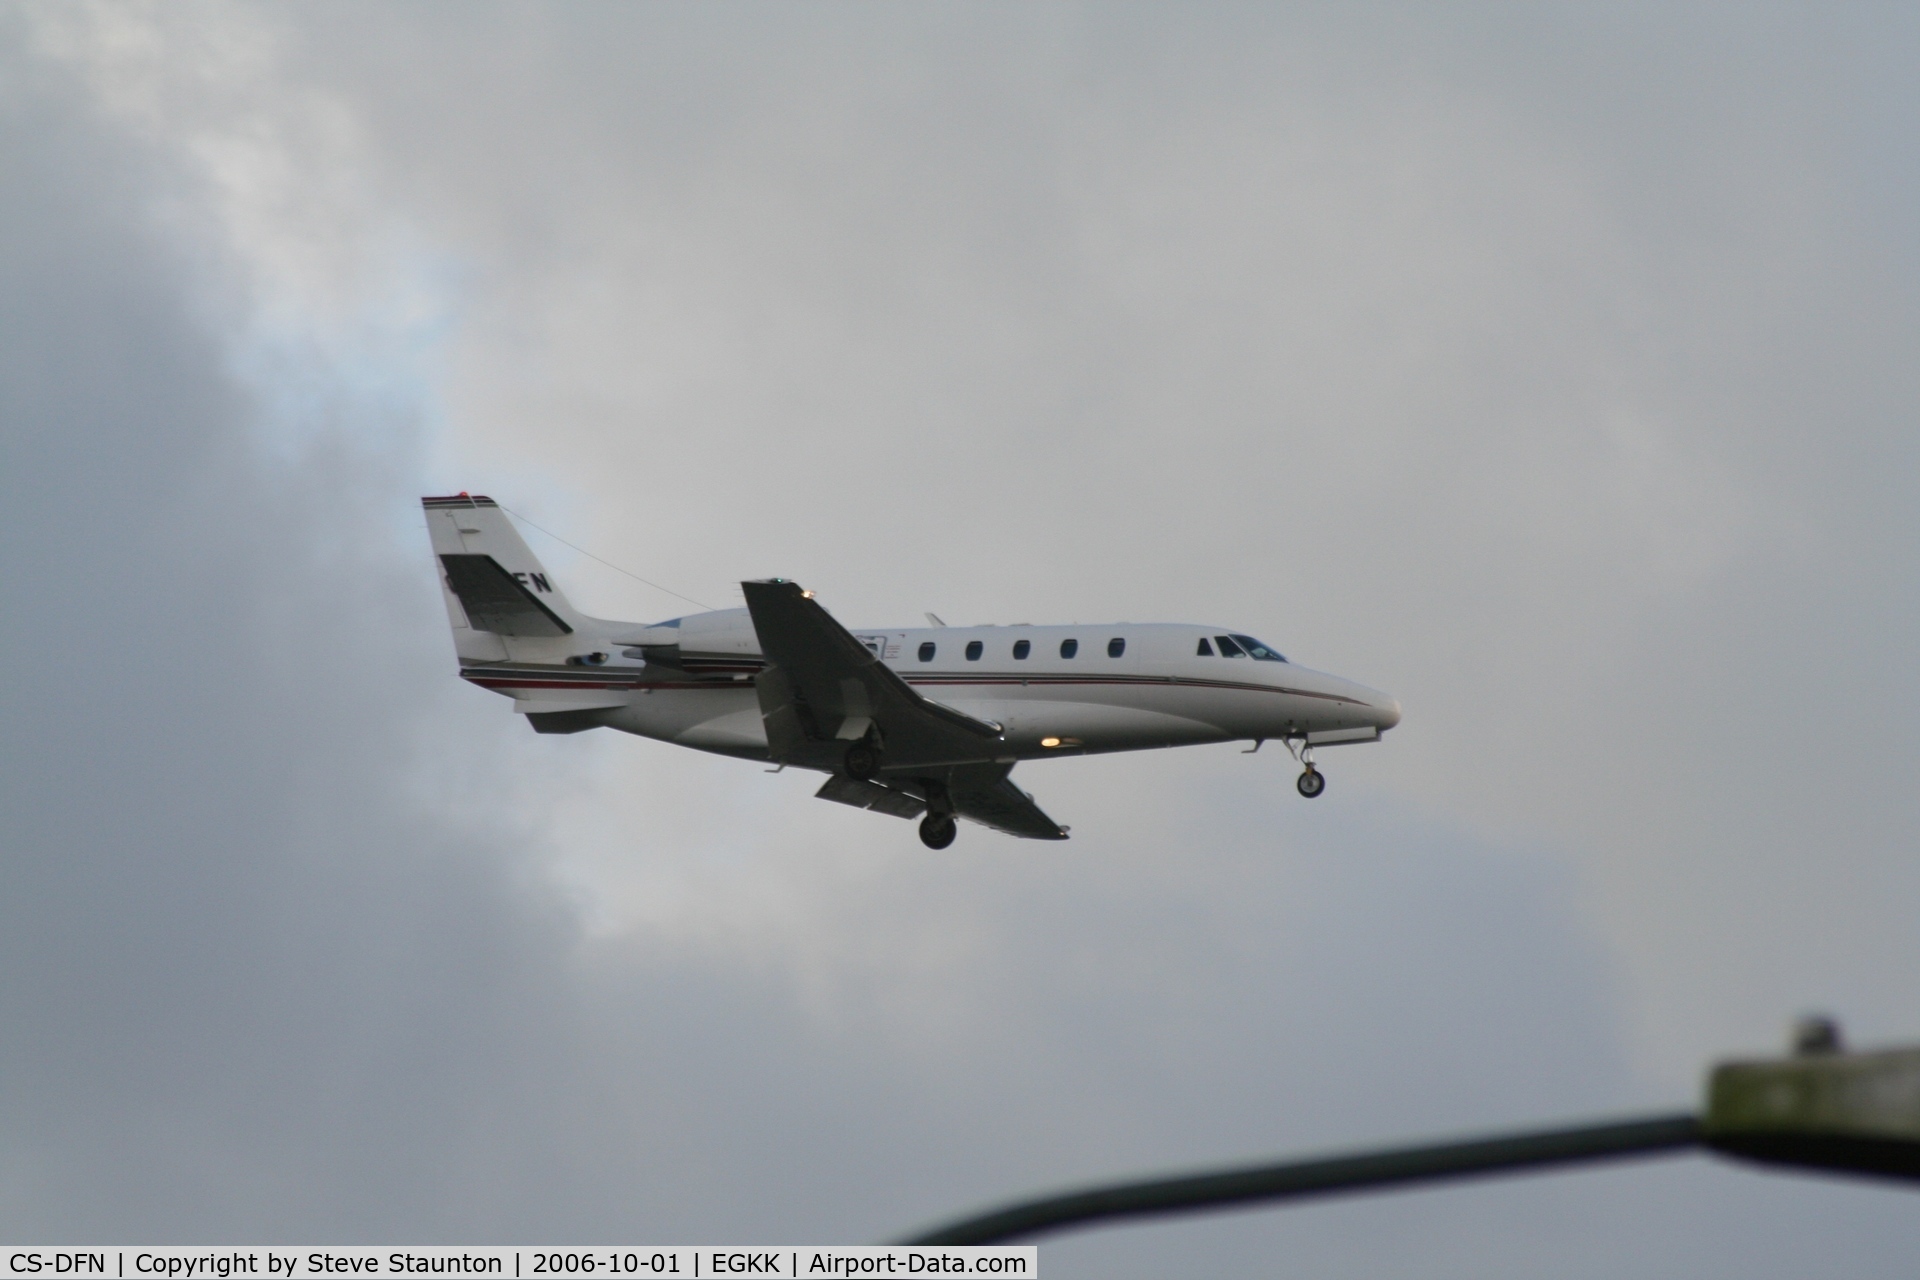 CS-DFN, 2002 Cessna 560XL Citation Excel C/N 560-5283, Taken at Gatwick Airport October 2006